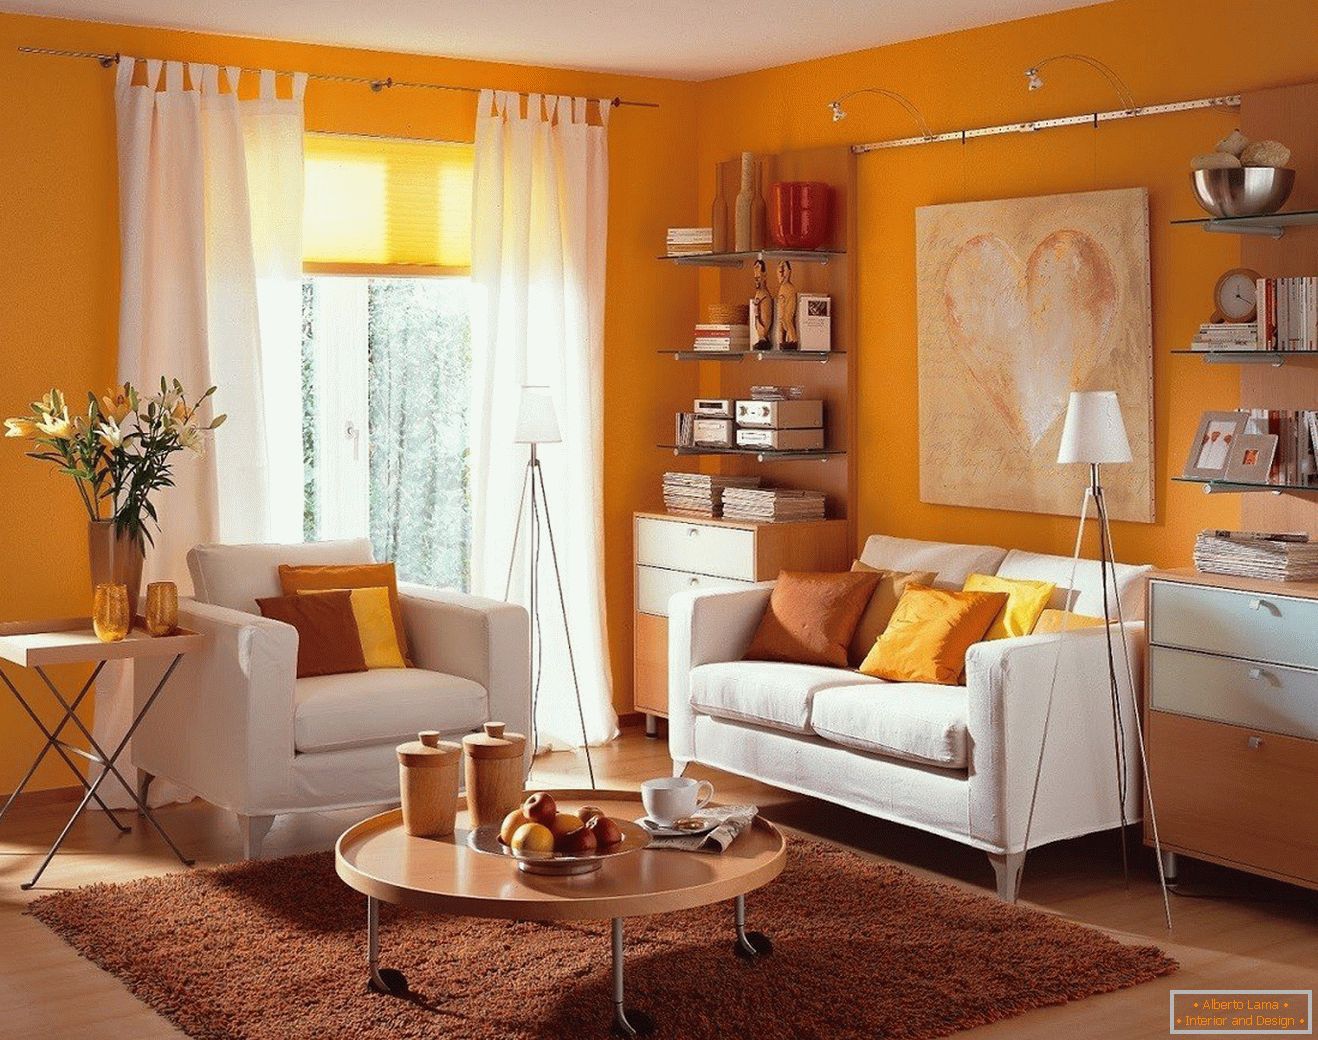 Living room with orange walls